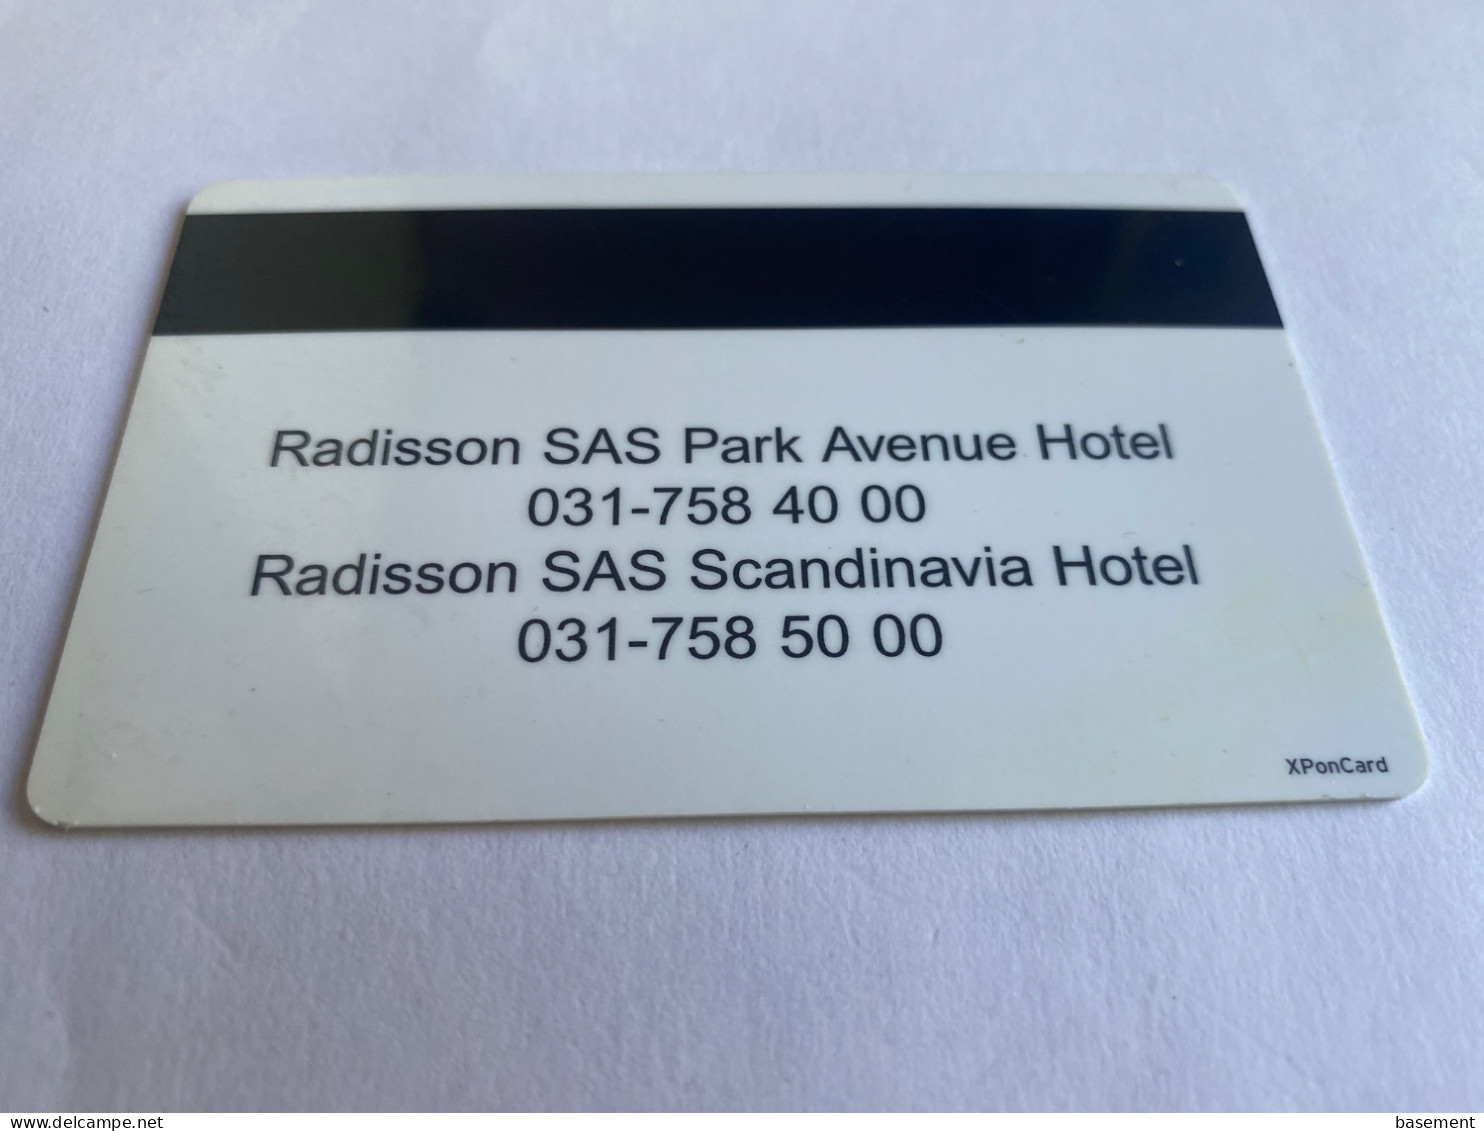 1:067 - Hotel KeyCard SAS Radisson Park Avenue Hotel - Cartes D'hotel